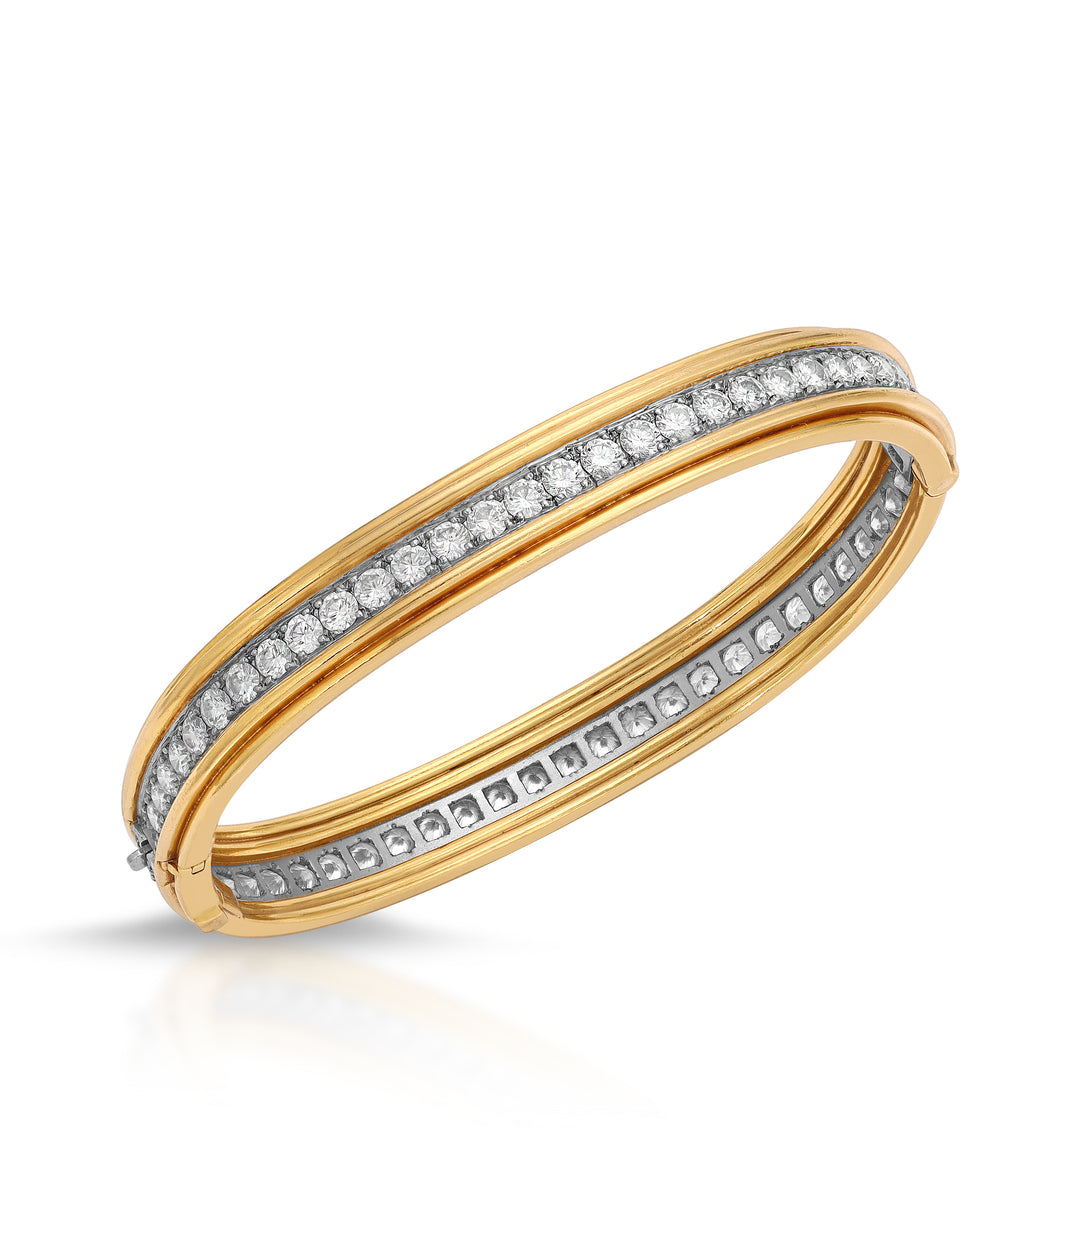 Toni Cavelti Diamond Bracelet in Platinum & 18K Gold